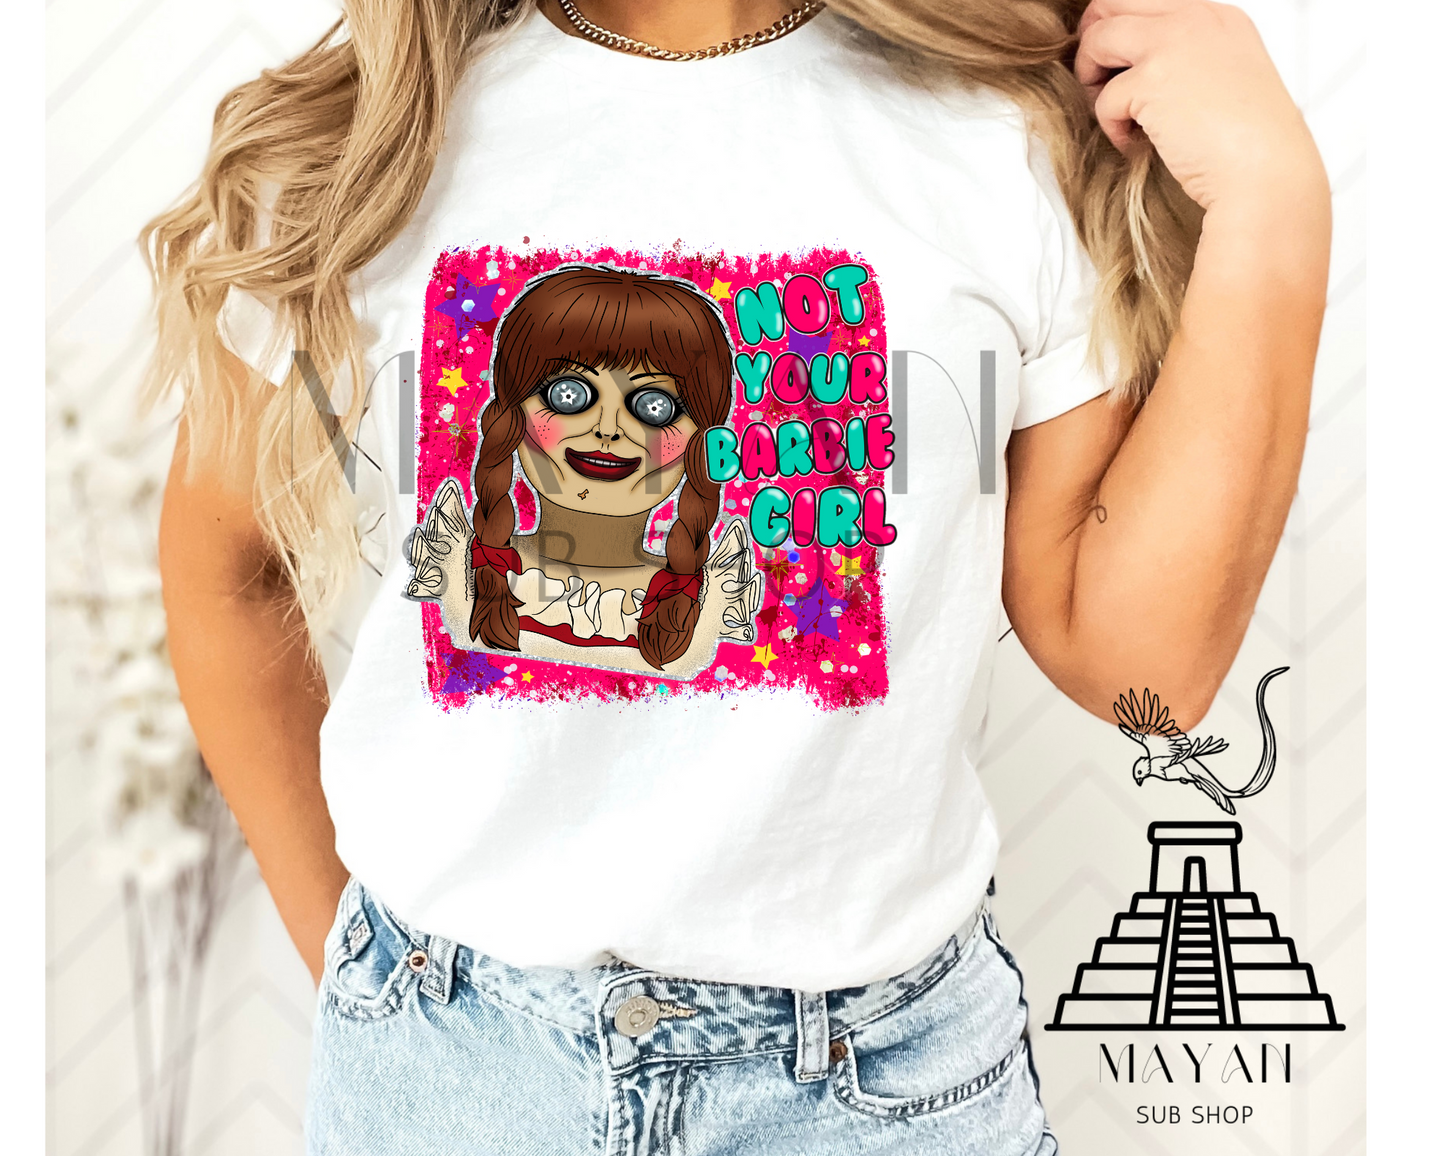 Not your girl shirt - Mayan Sub Shop